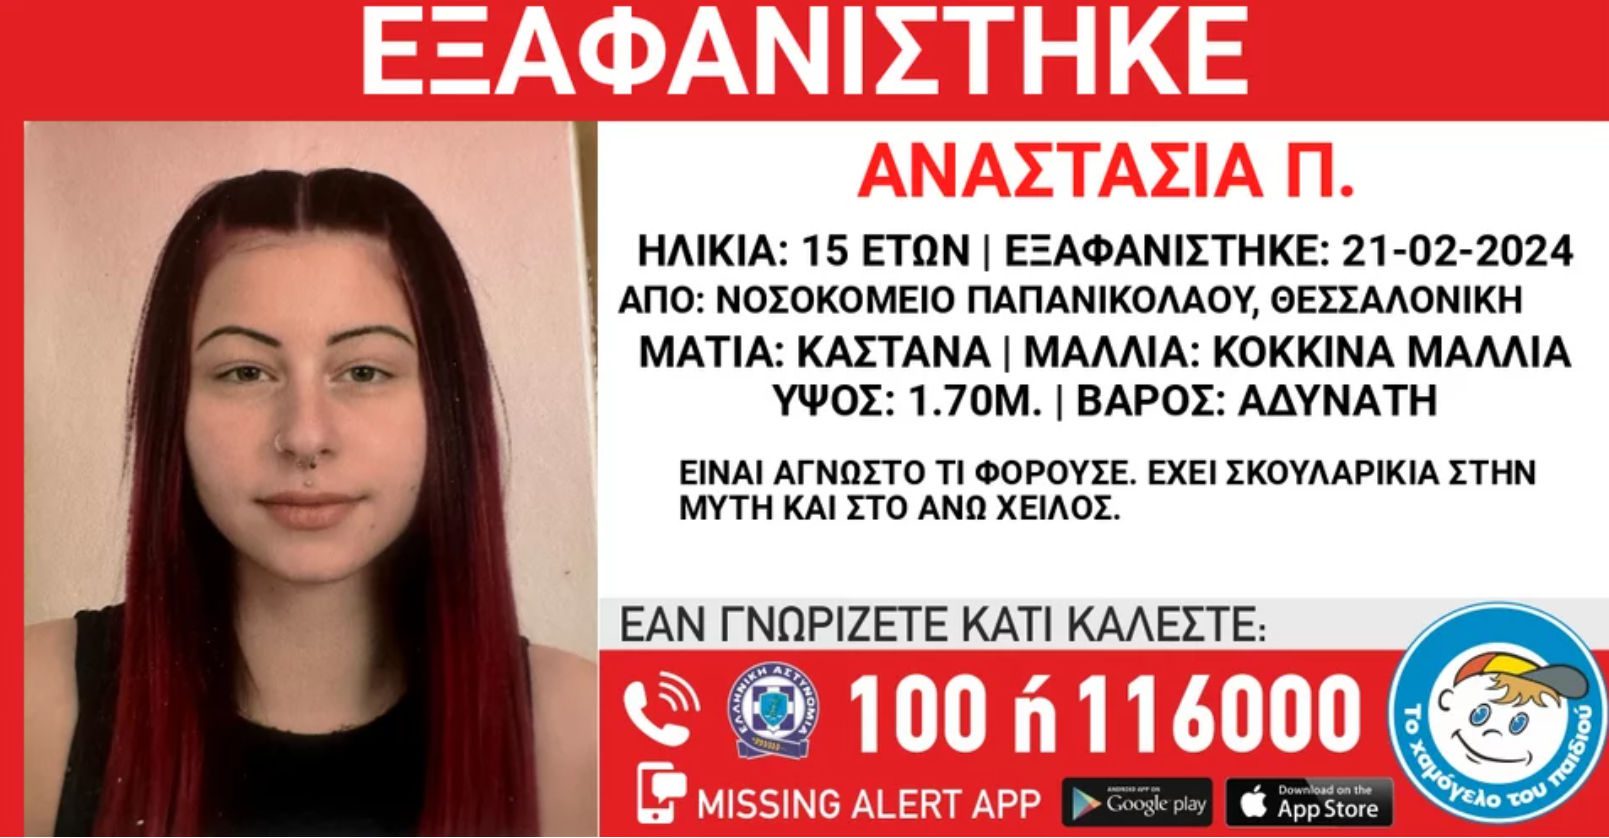 Missing Alert: Συναγερμός για την εξαφάνιση 15χρονης από νοσοκομείο στη Θεσσαλονίκη